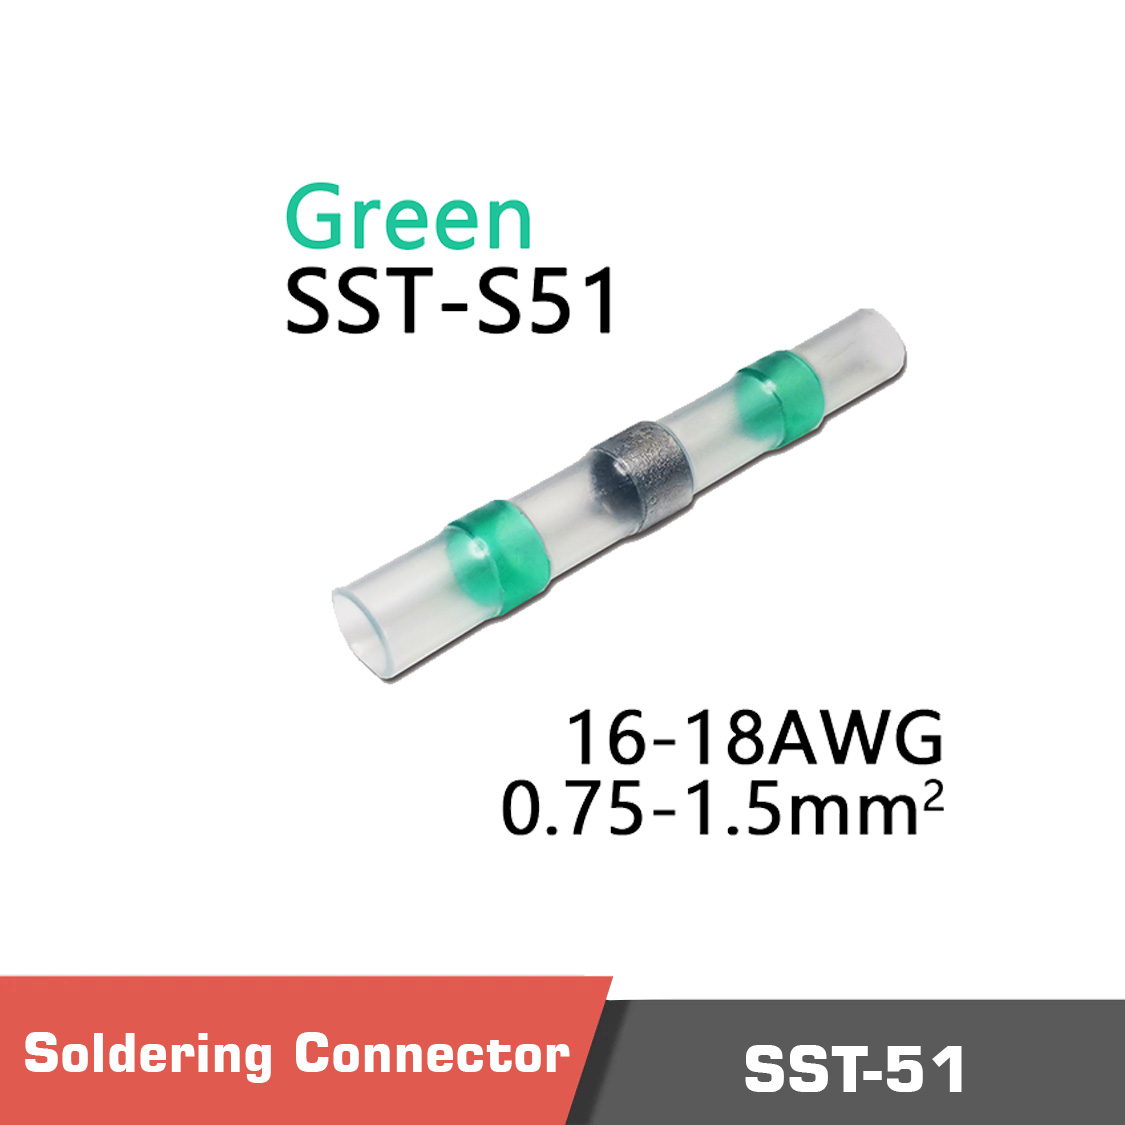 Sst 51 - sst-41,sst-41 soldering connector,soldering connector - motionew - 14